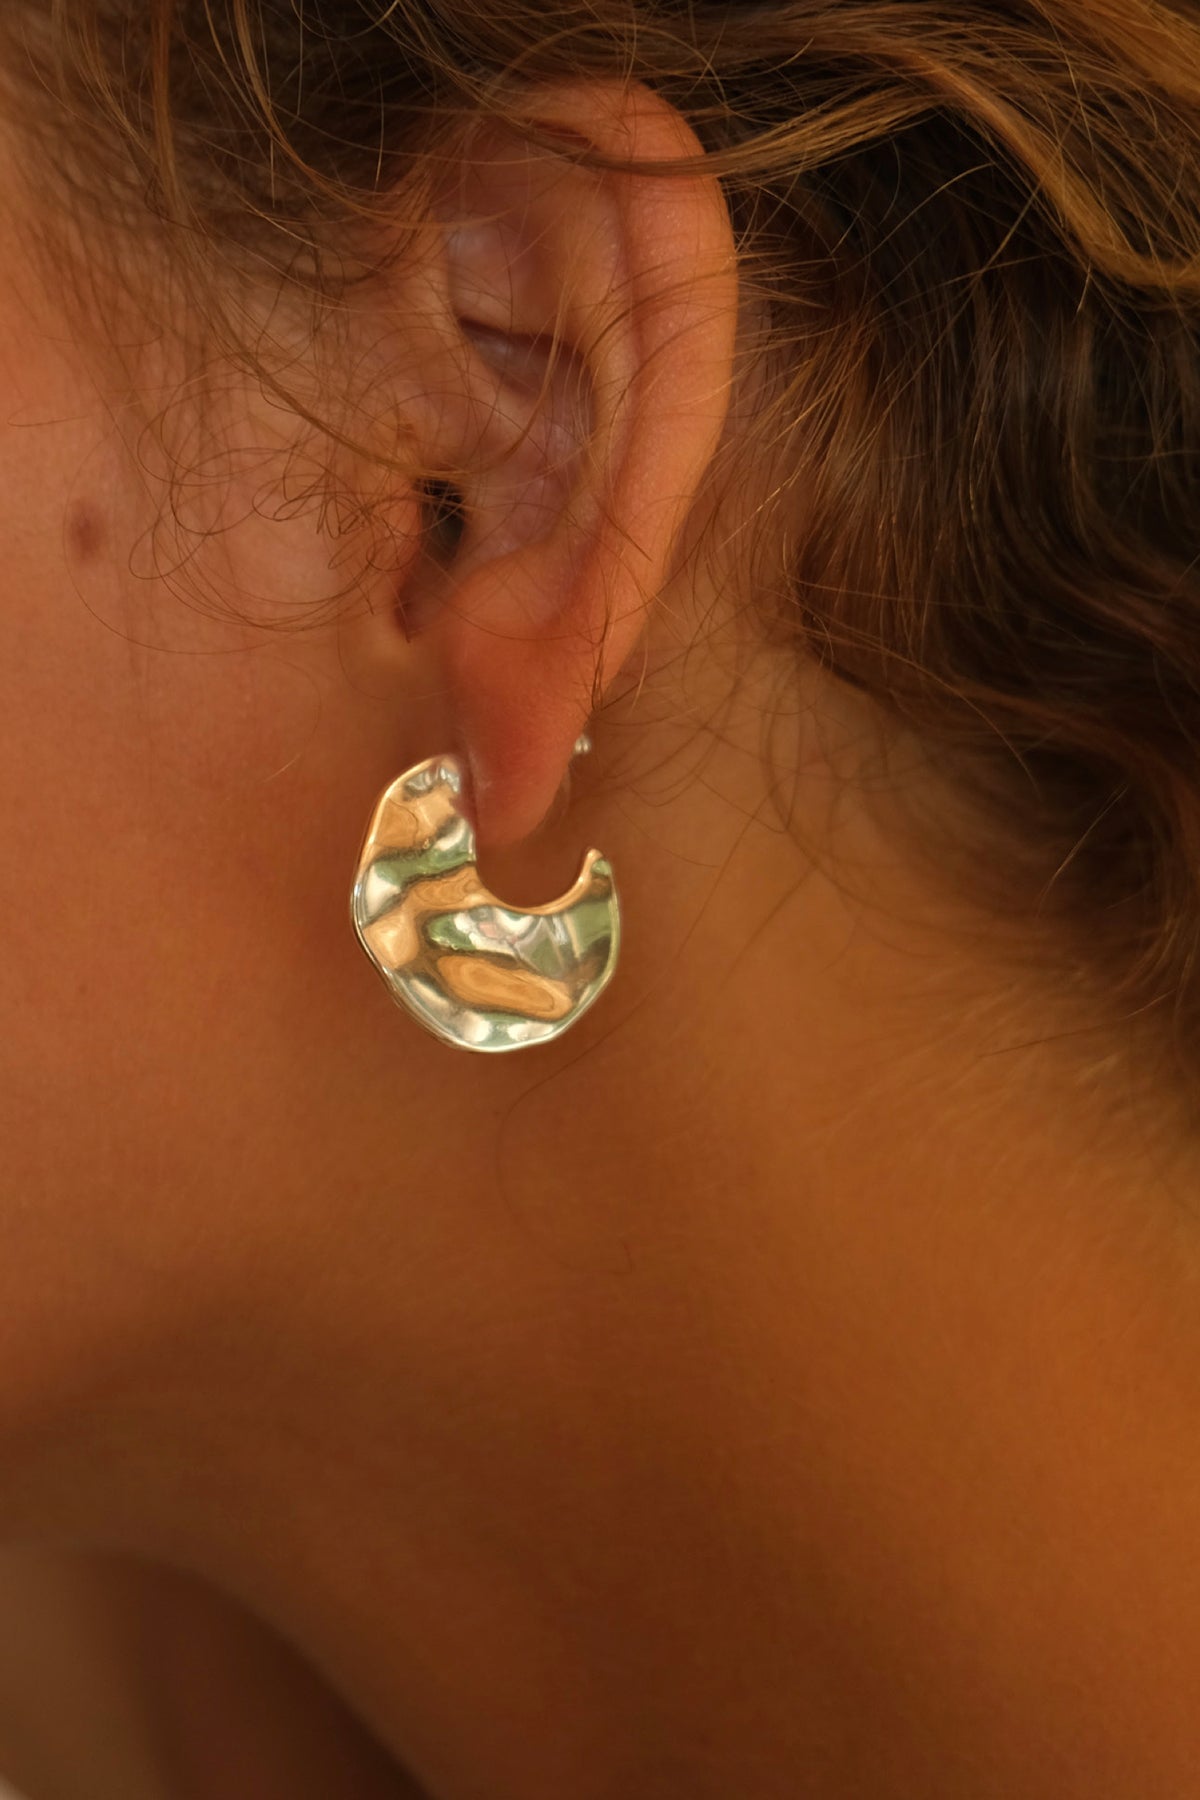 Sculptured Earrings Gold